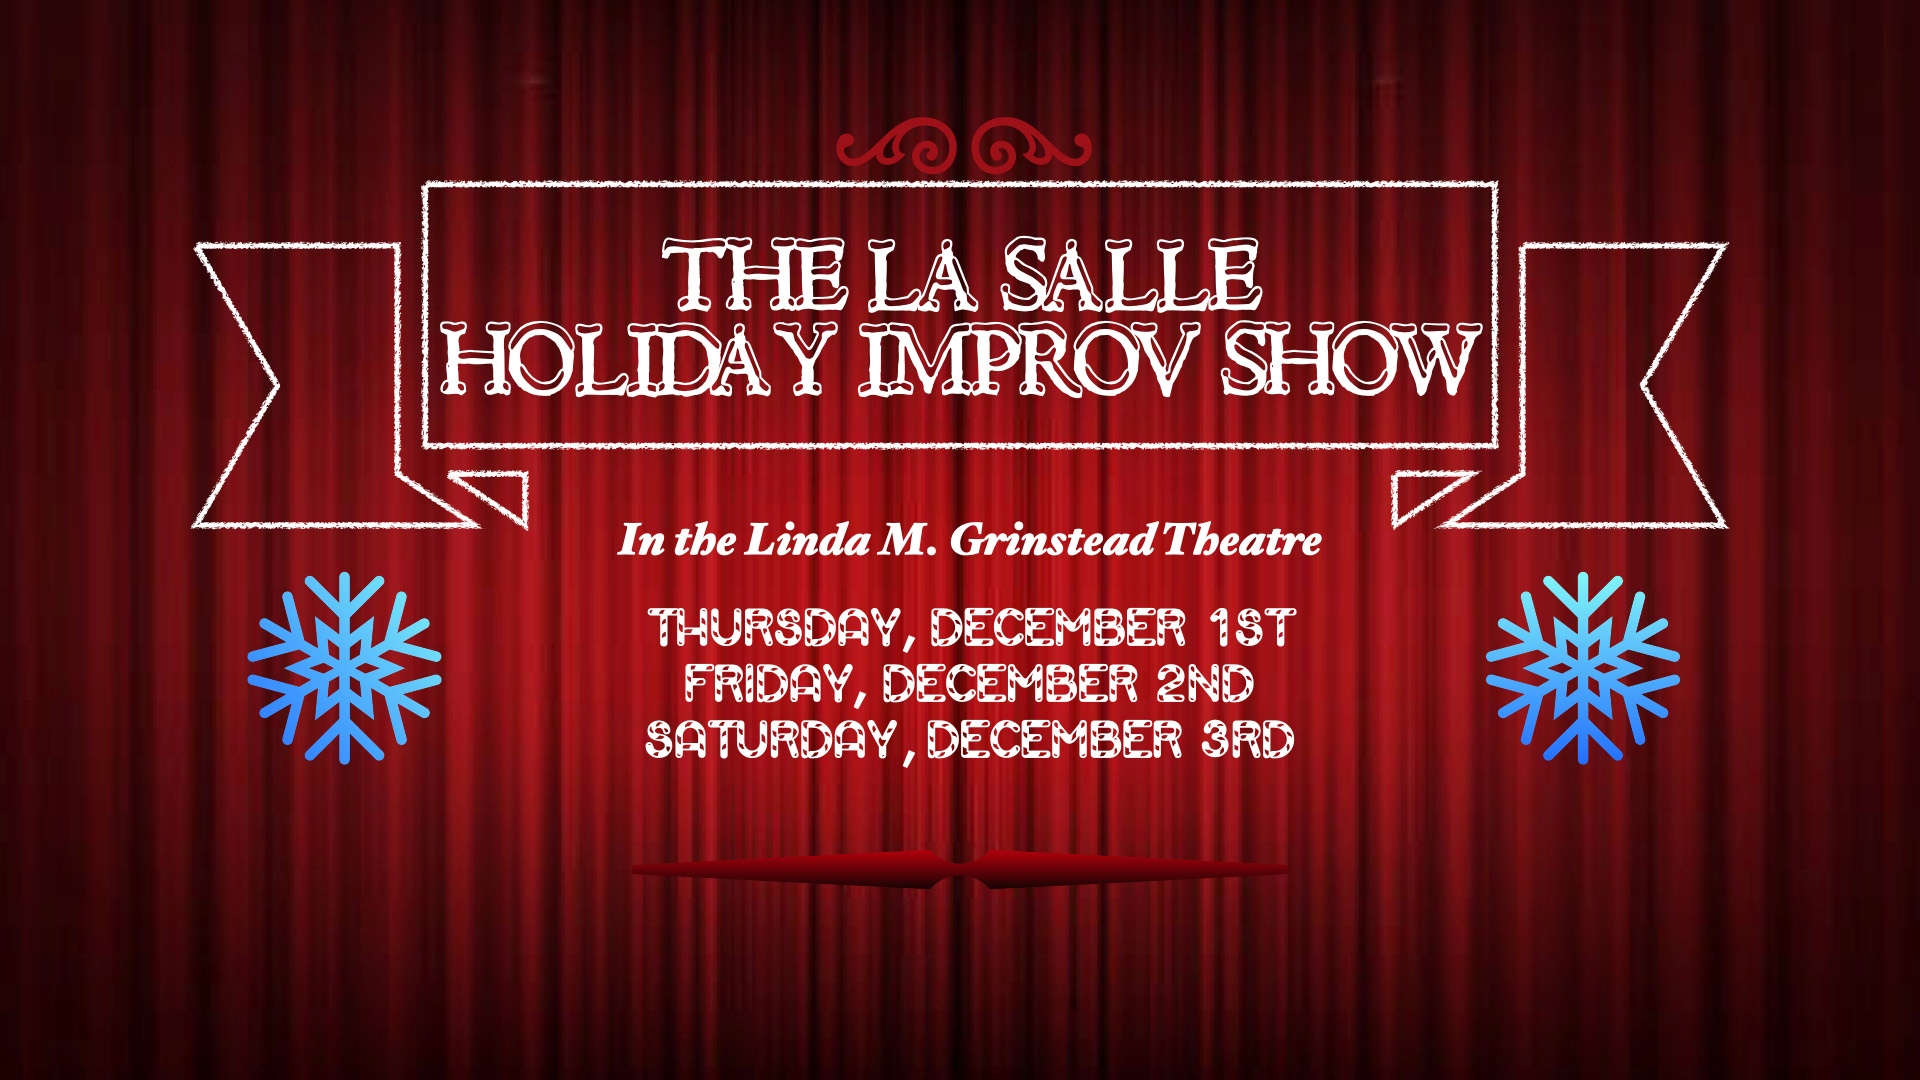 The La Salle Holiday Improv Show